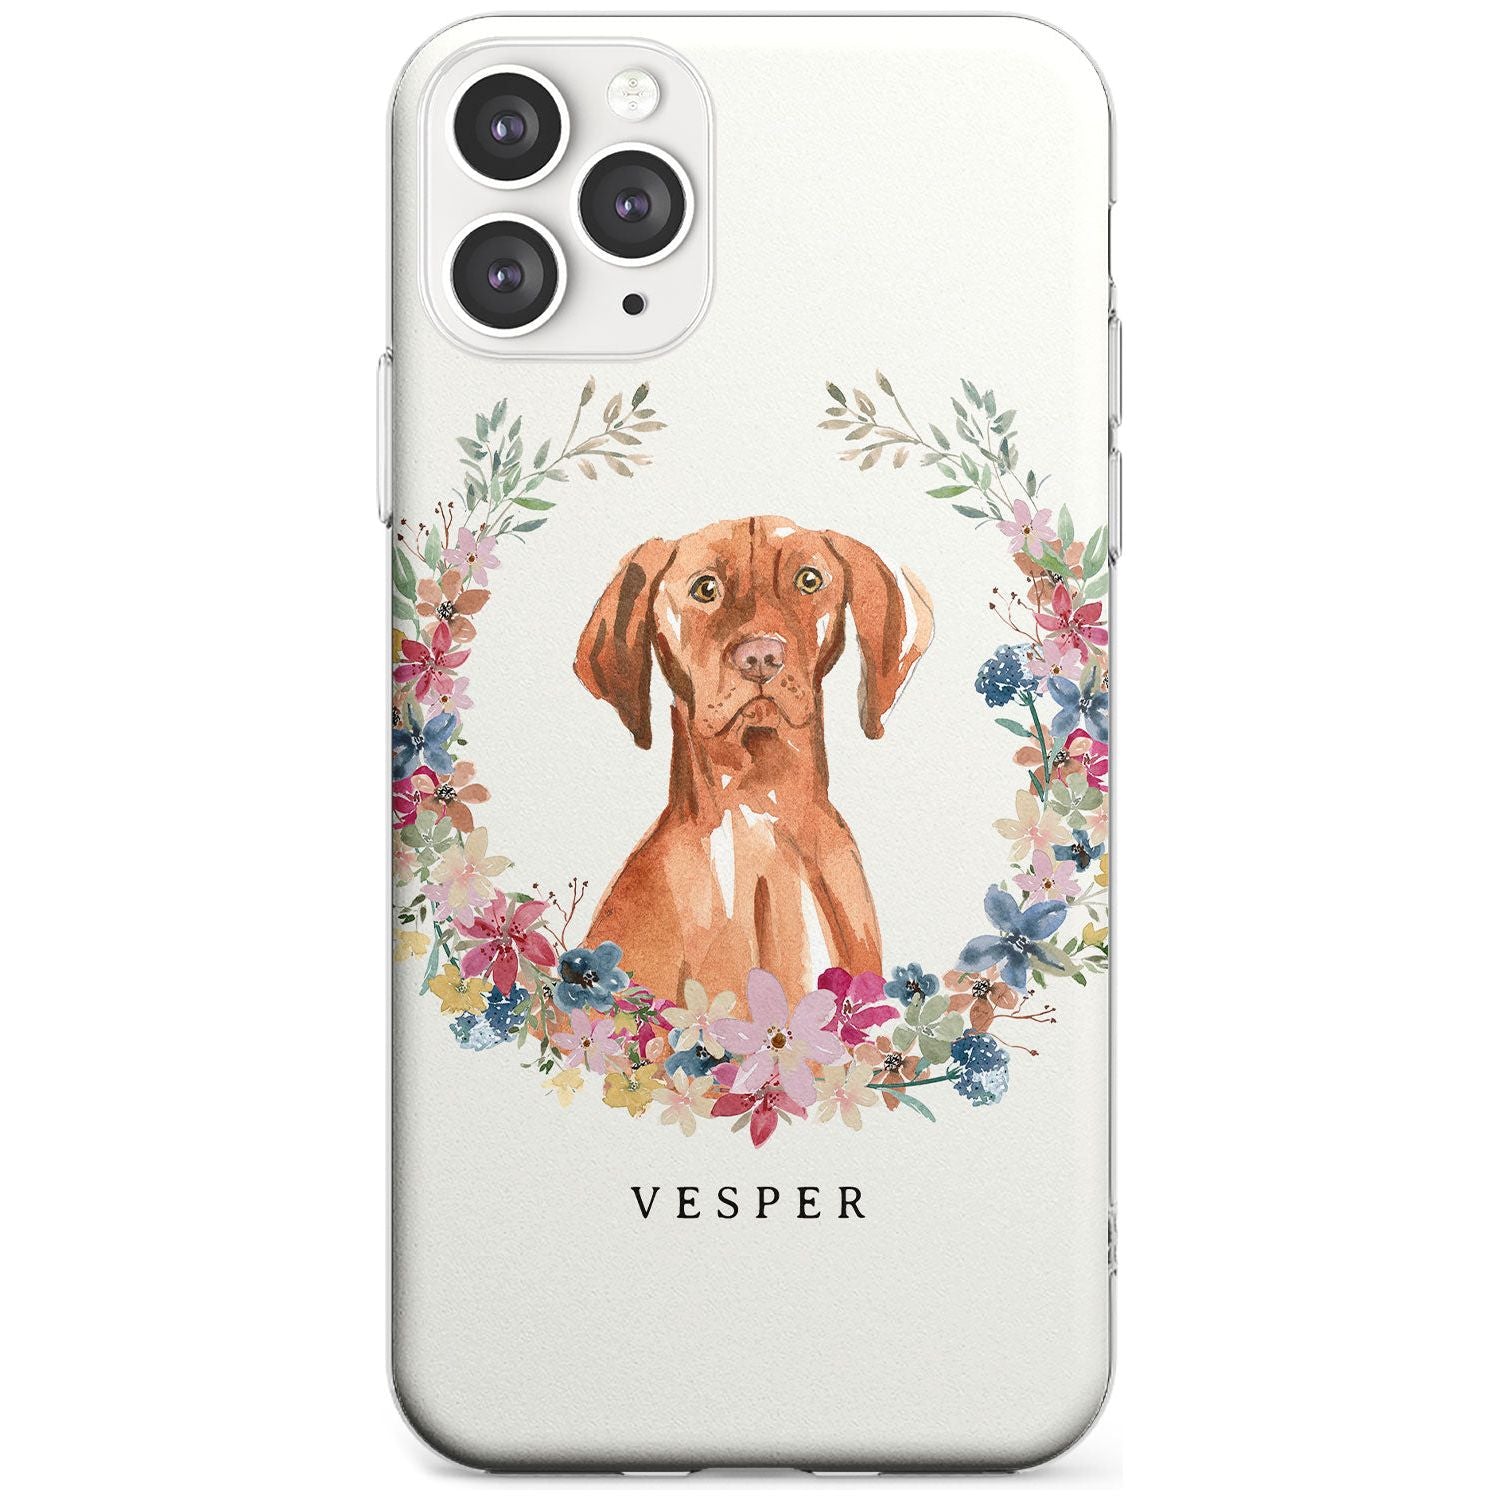 Hungarian Vizsla - Watercolour Dog Portrait Slim TPU Phone Case for iPhone 11 Pro Max